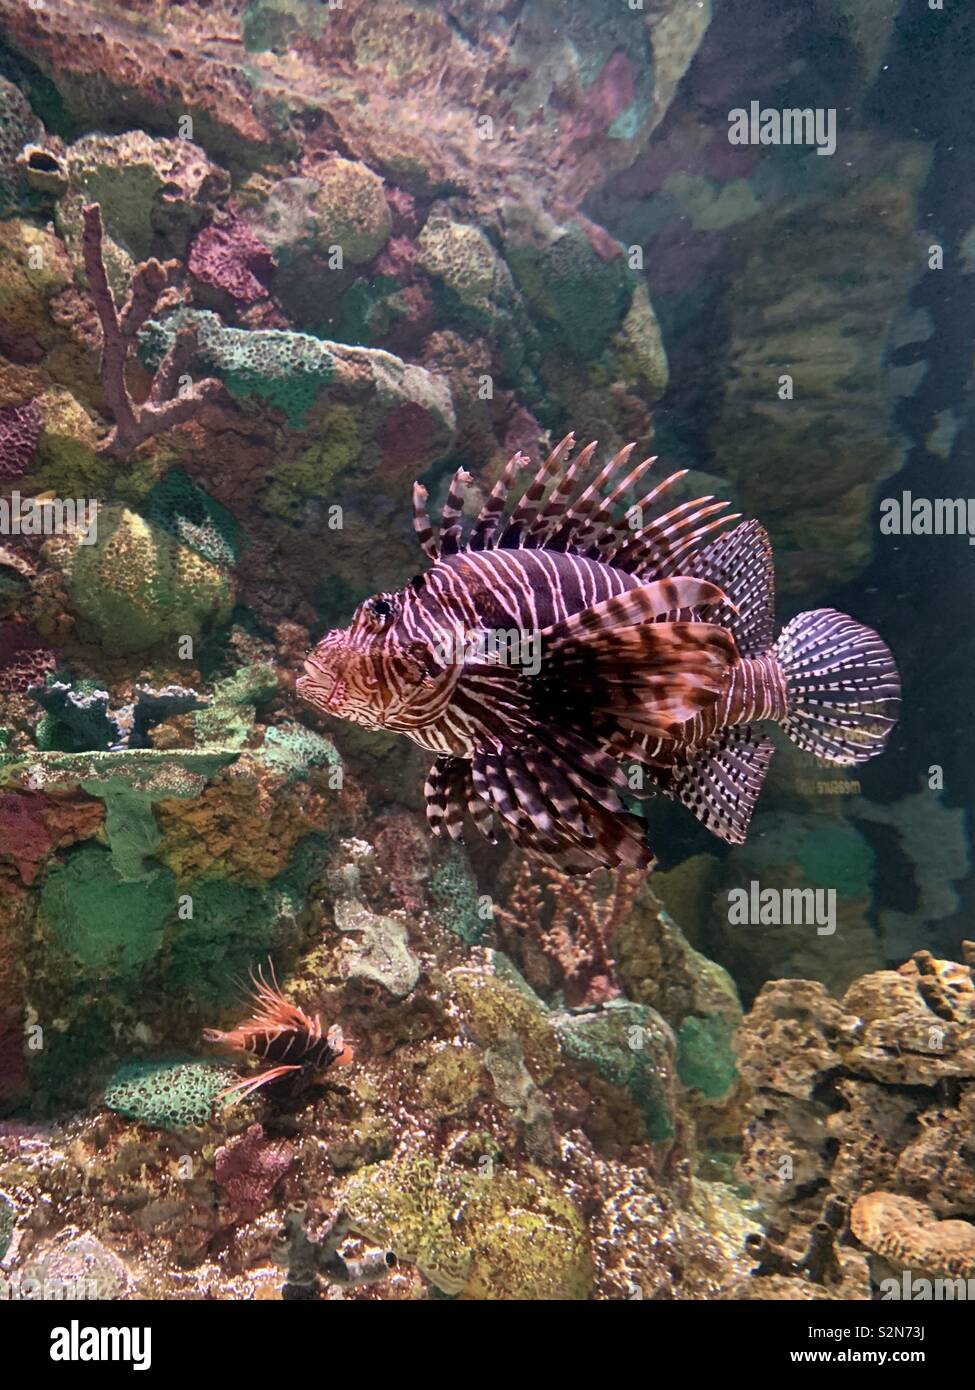 Aquatic marine life, lion fish with aquatic plants Stock Photo